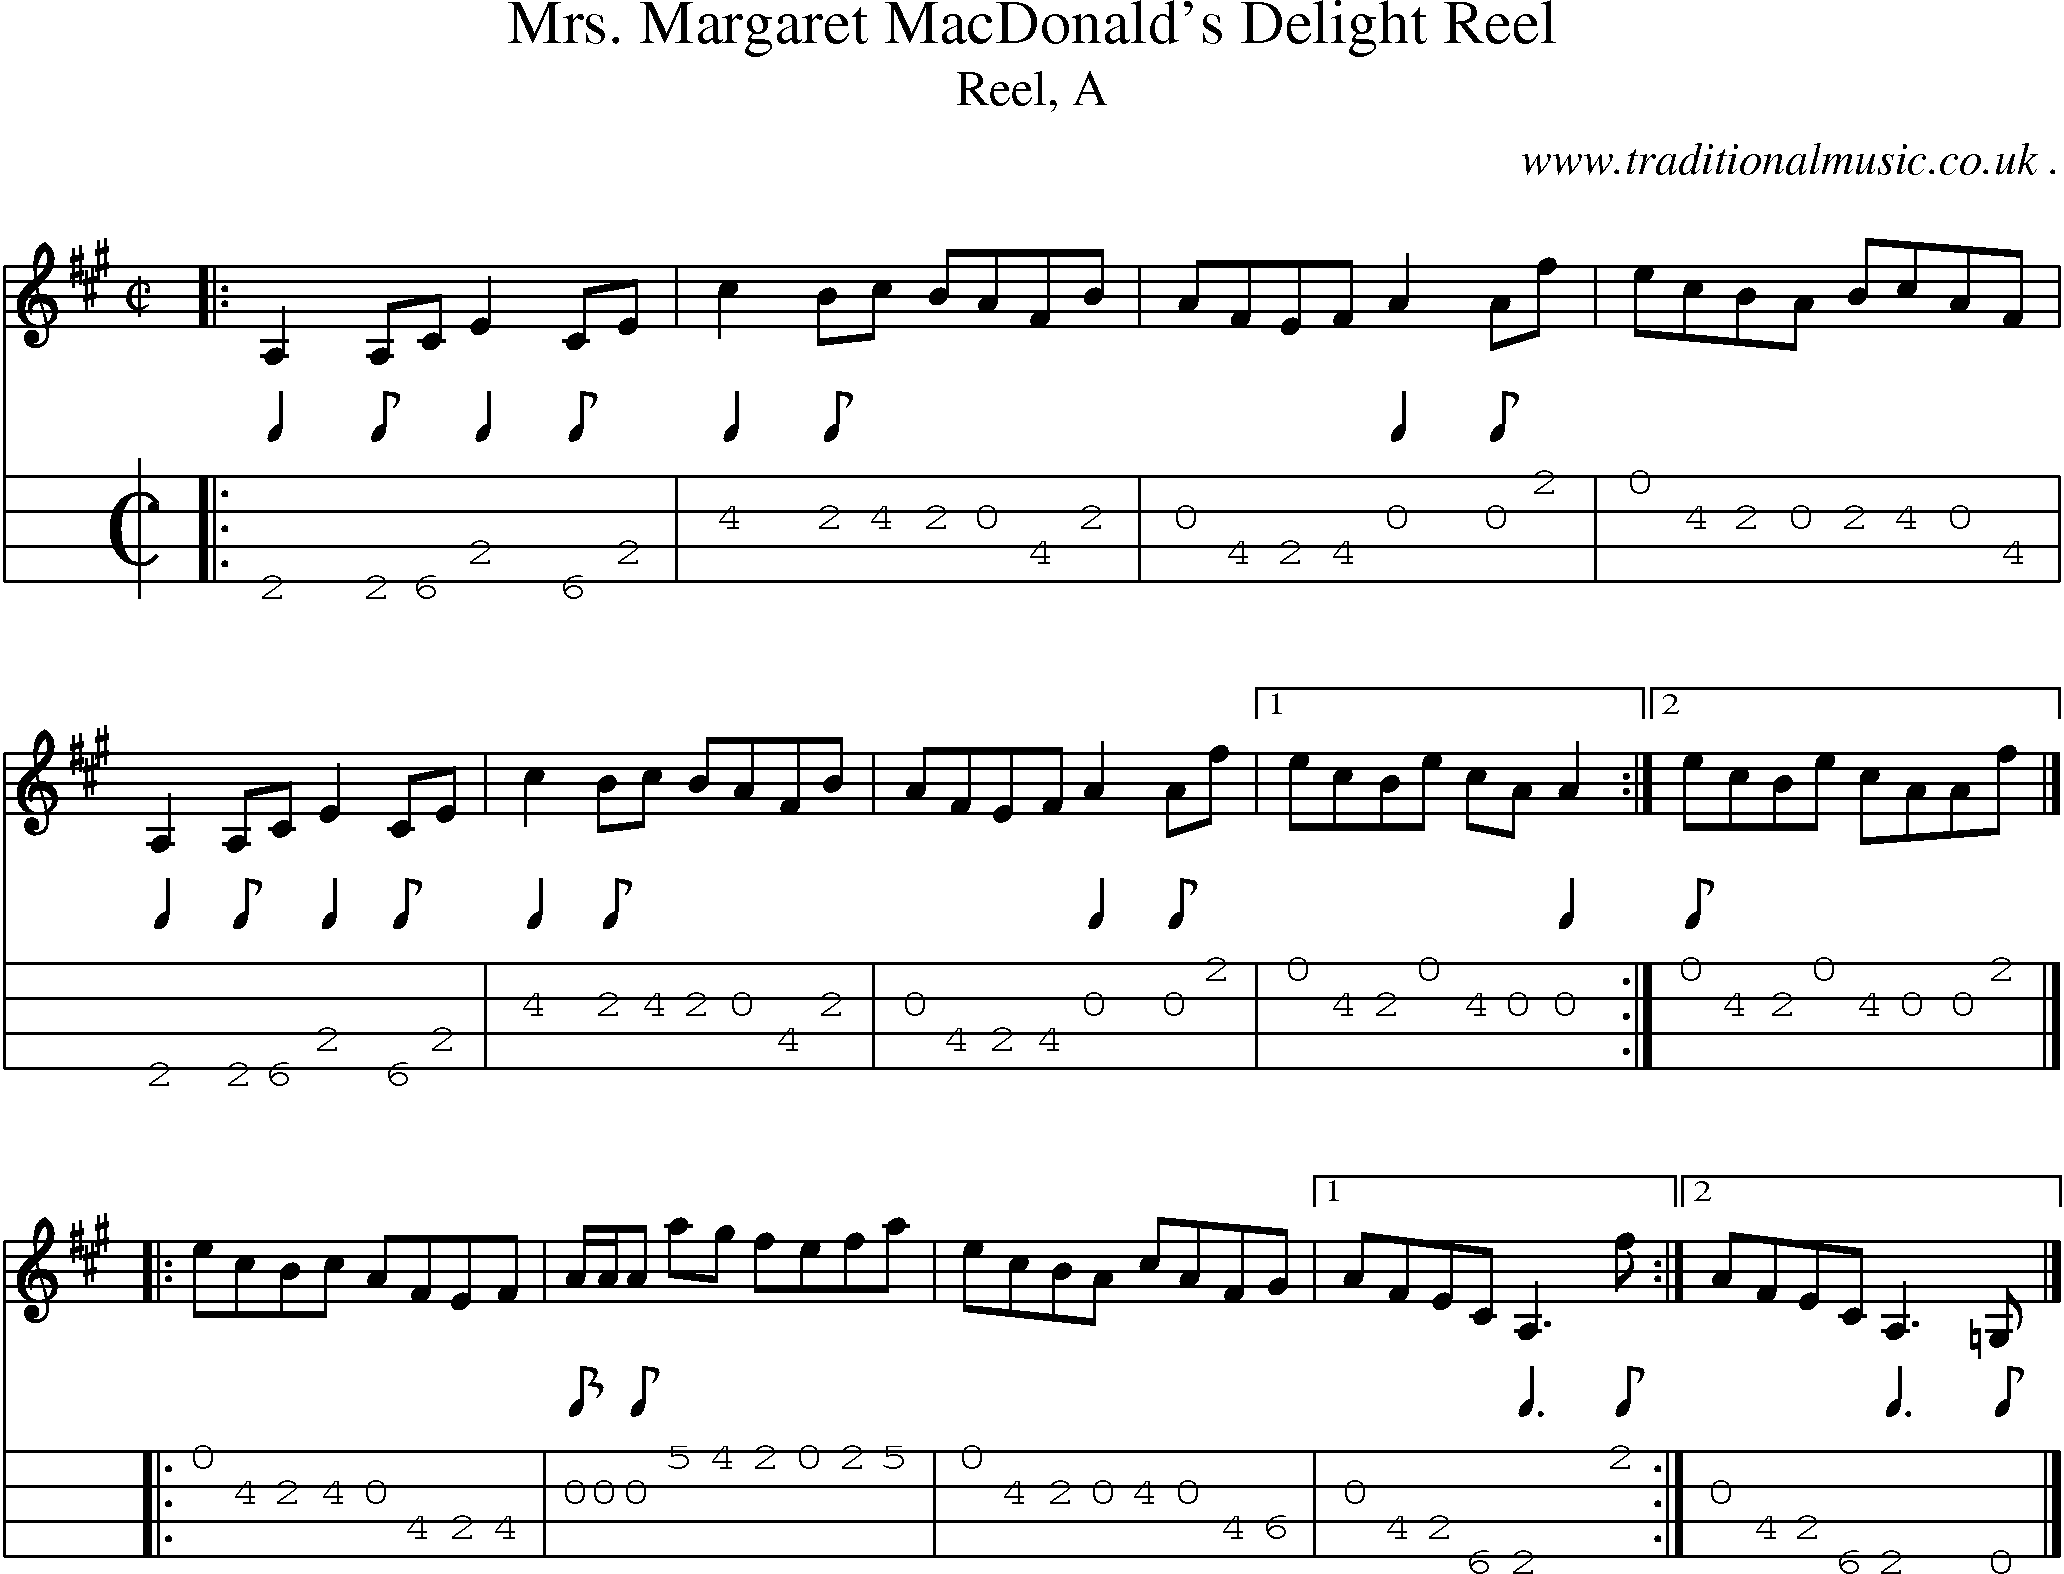 Sheet-music  score, Chords and Mandolin Tabs for Mrs Margaret Macdonalds Delight Reel